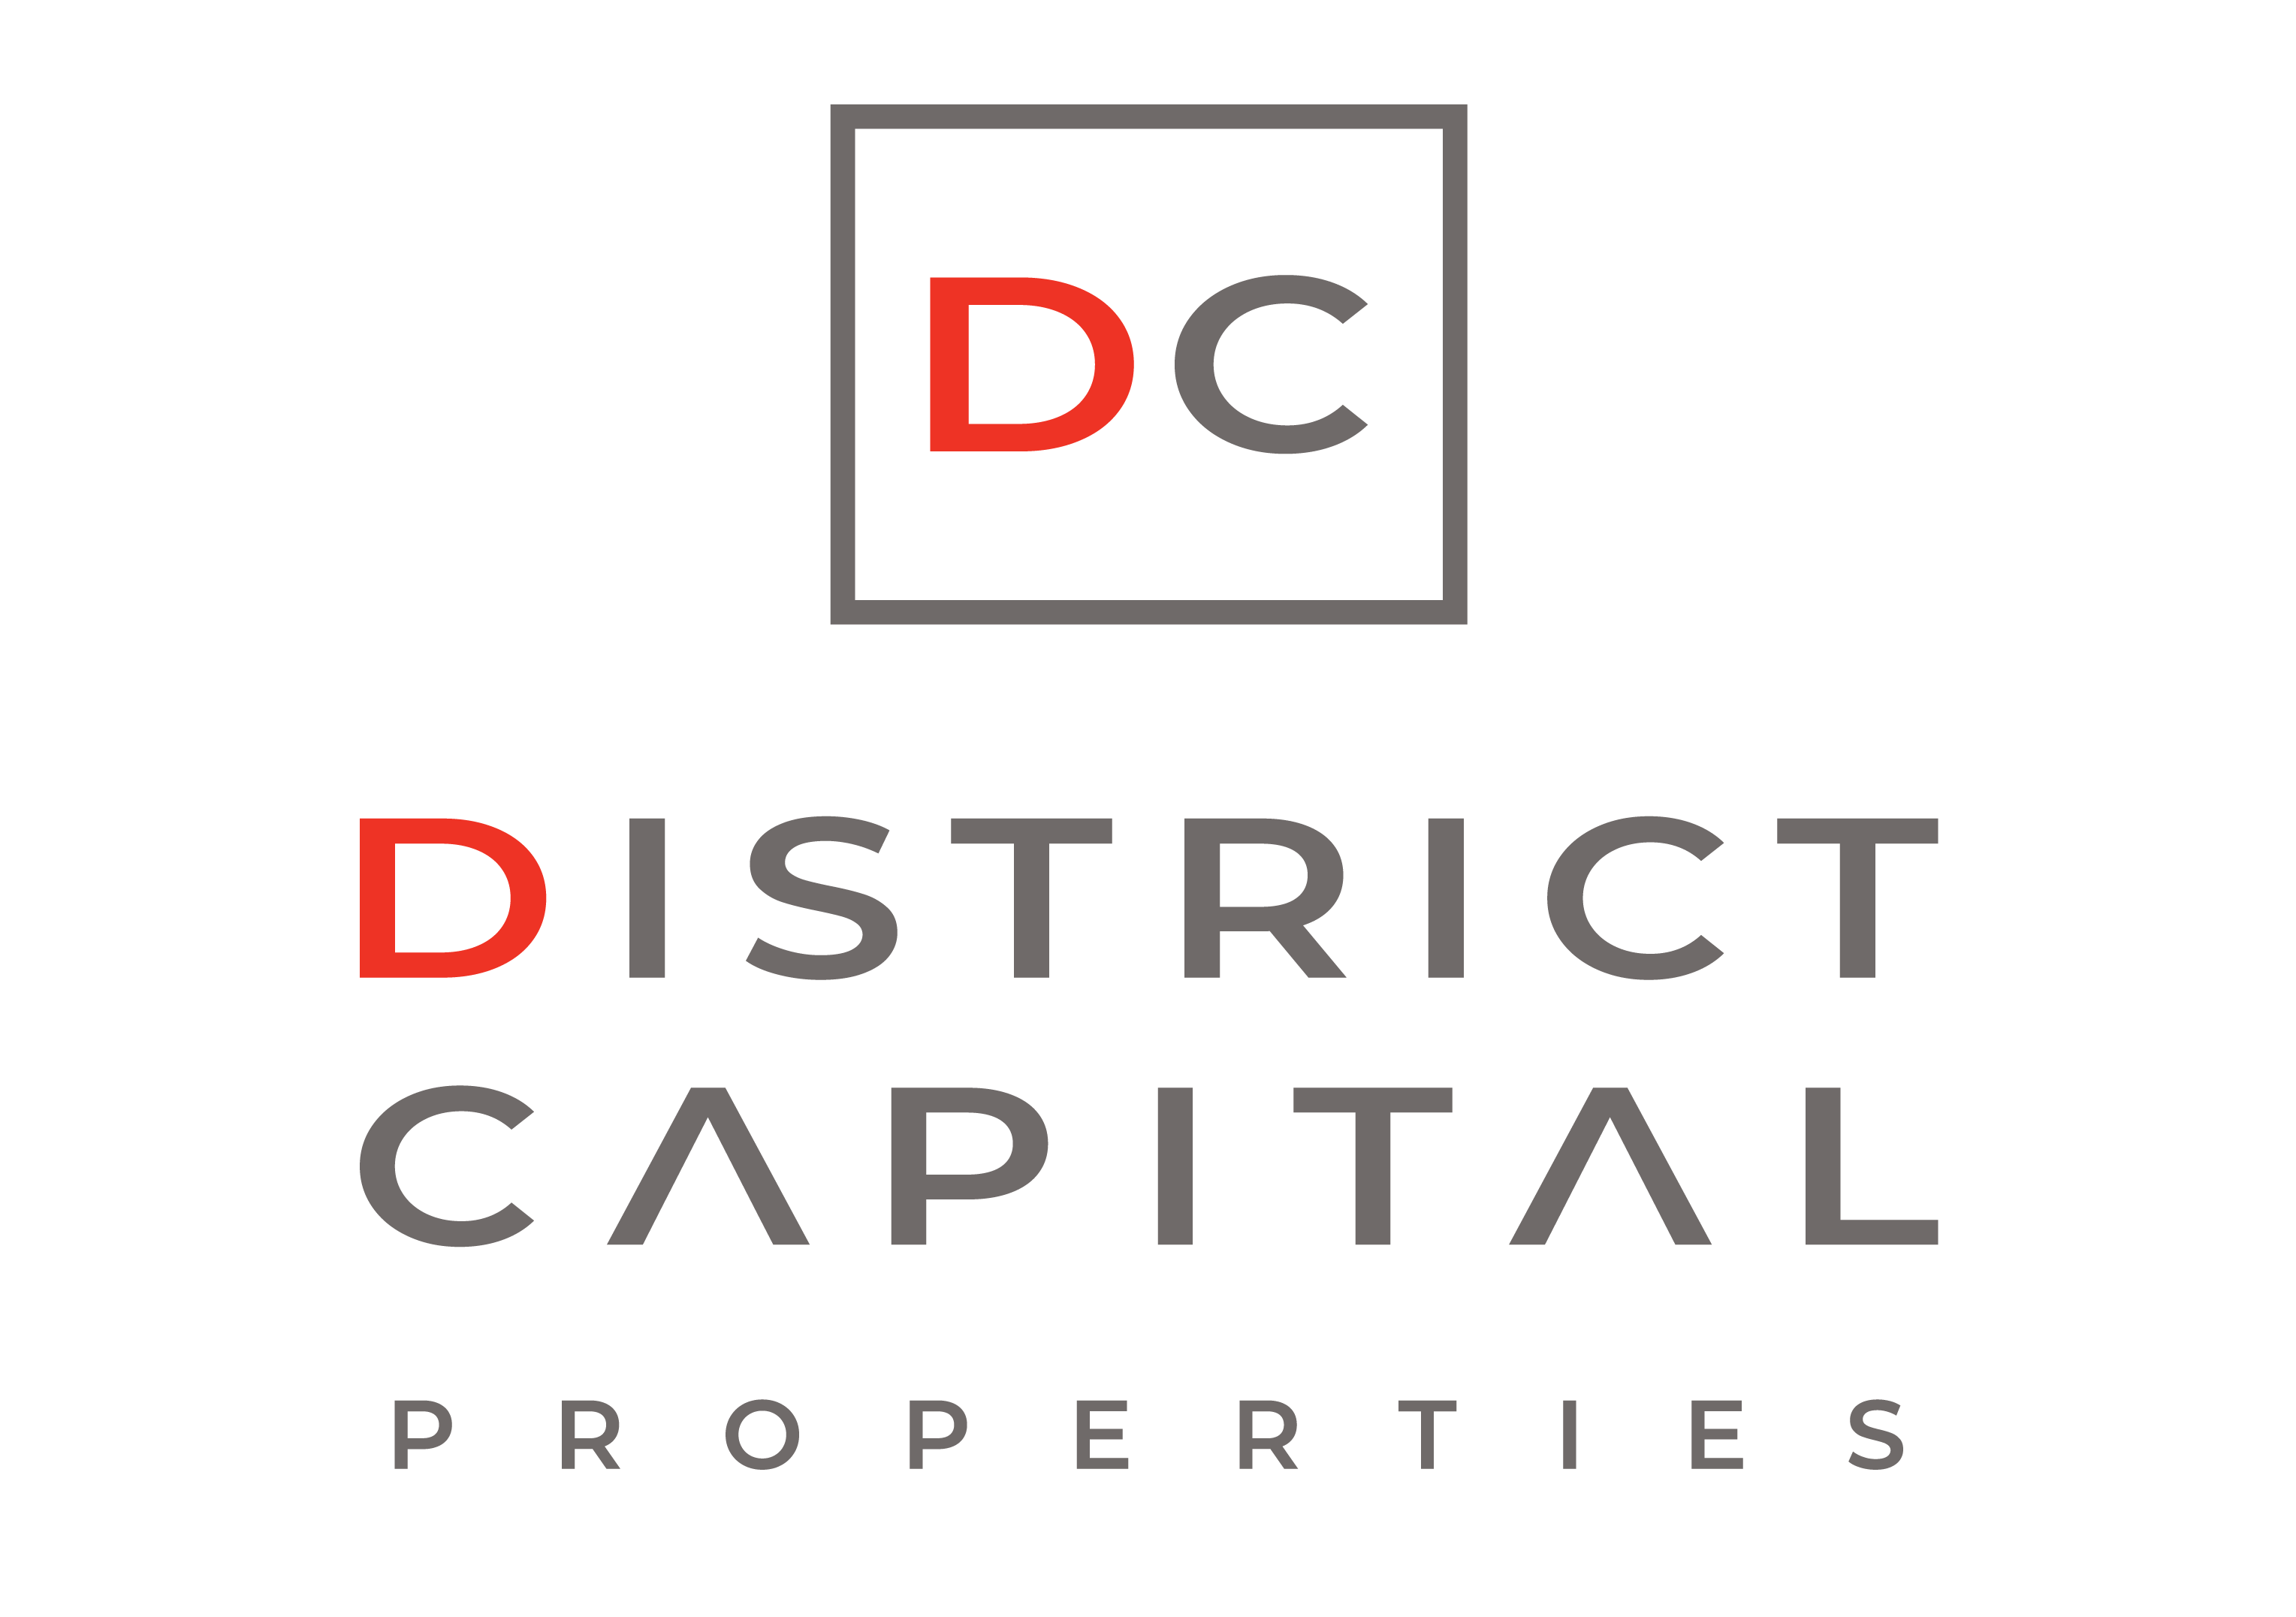 District Capital Properties